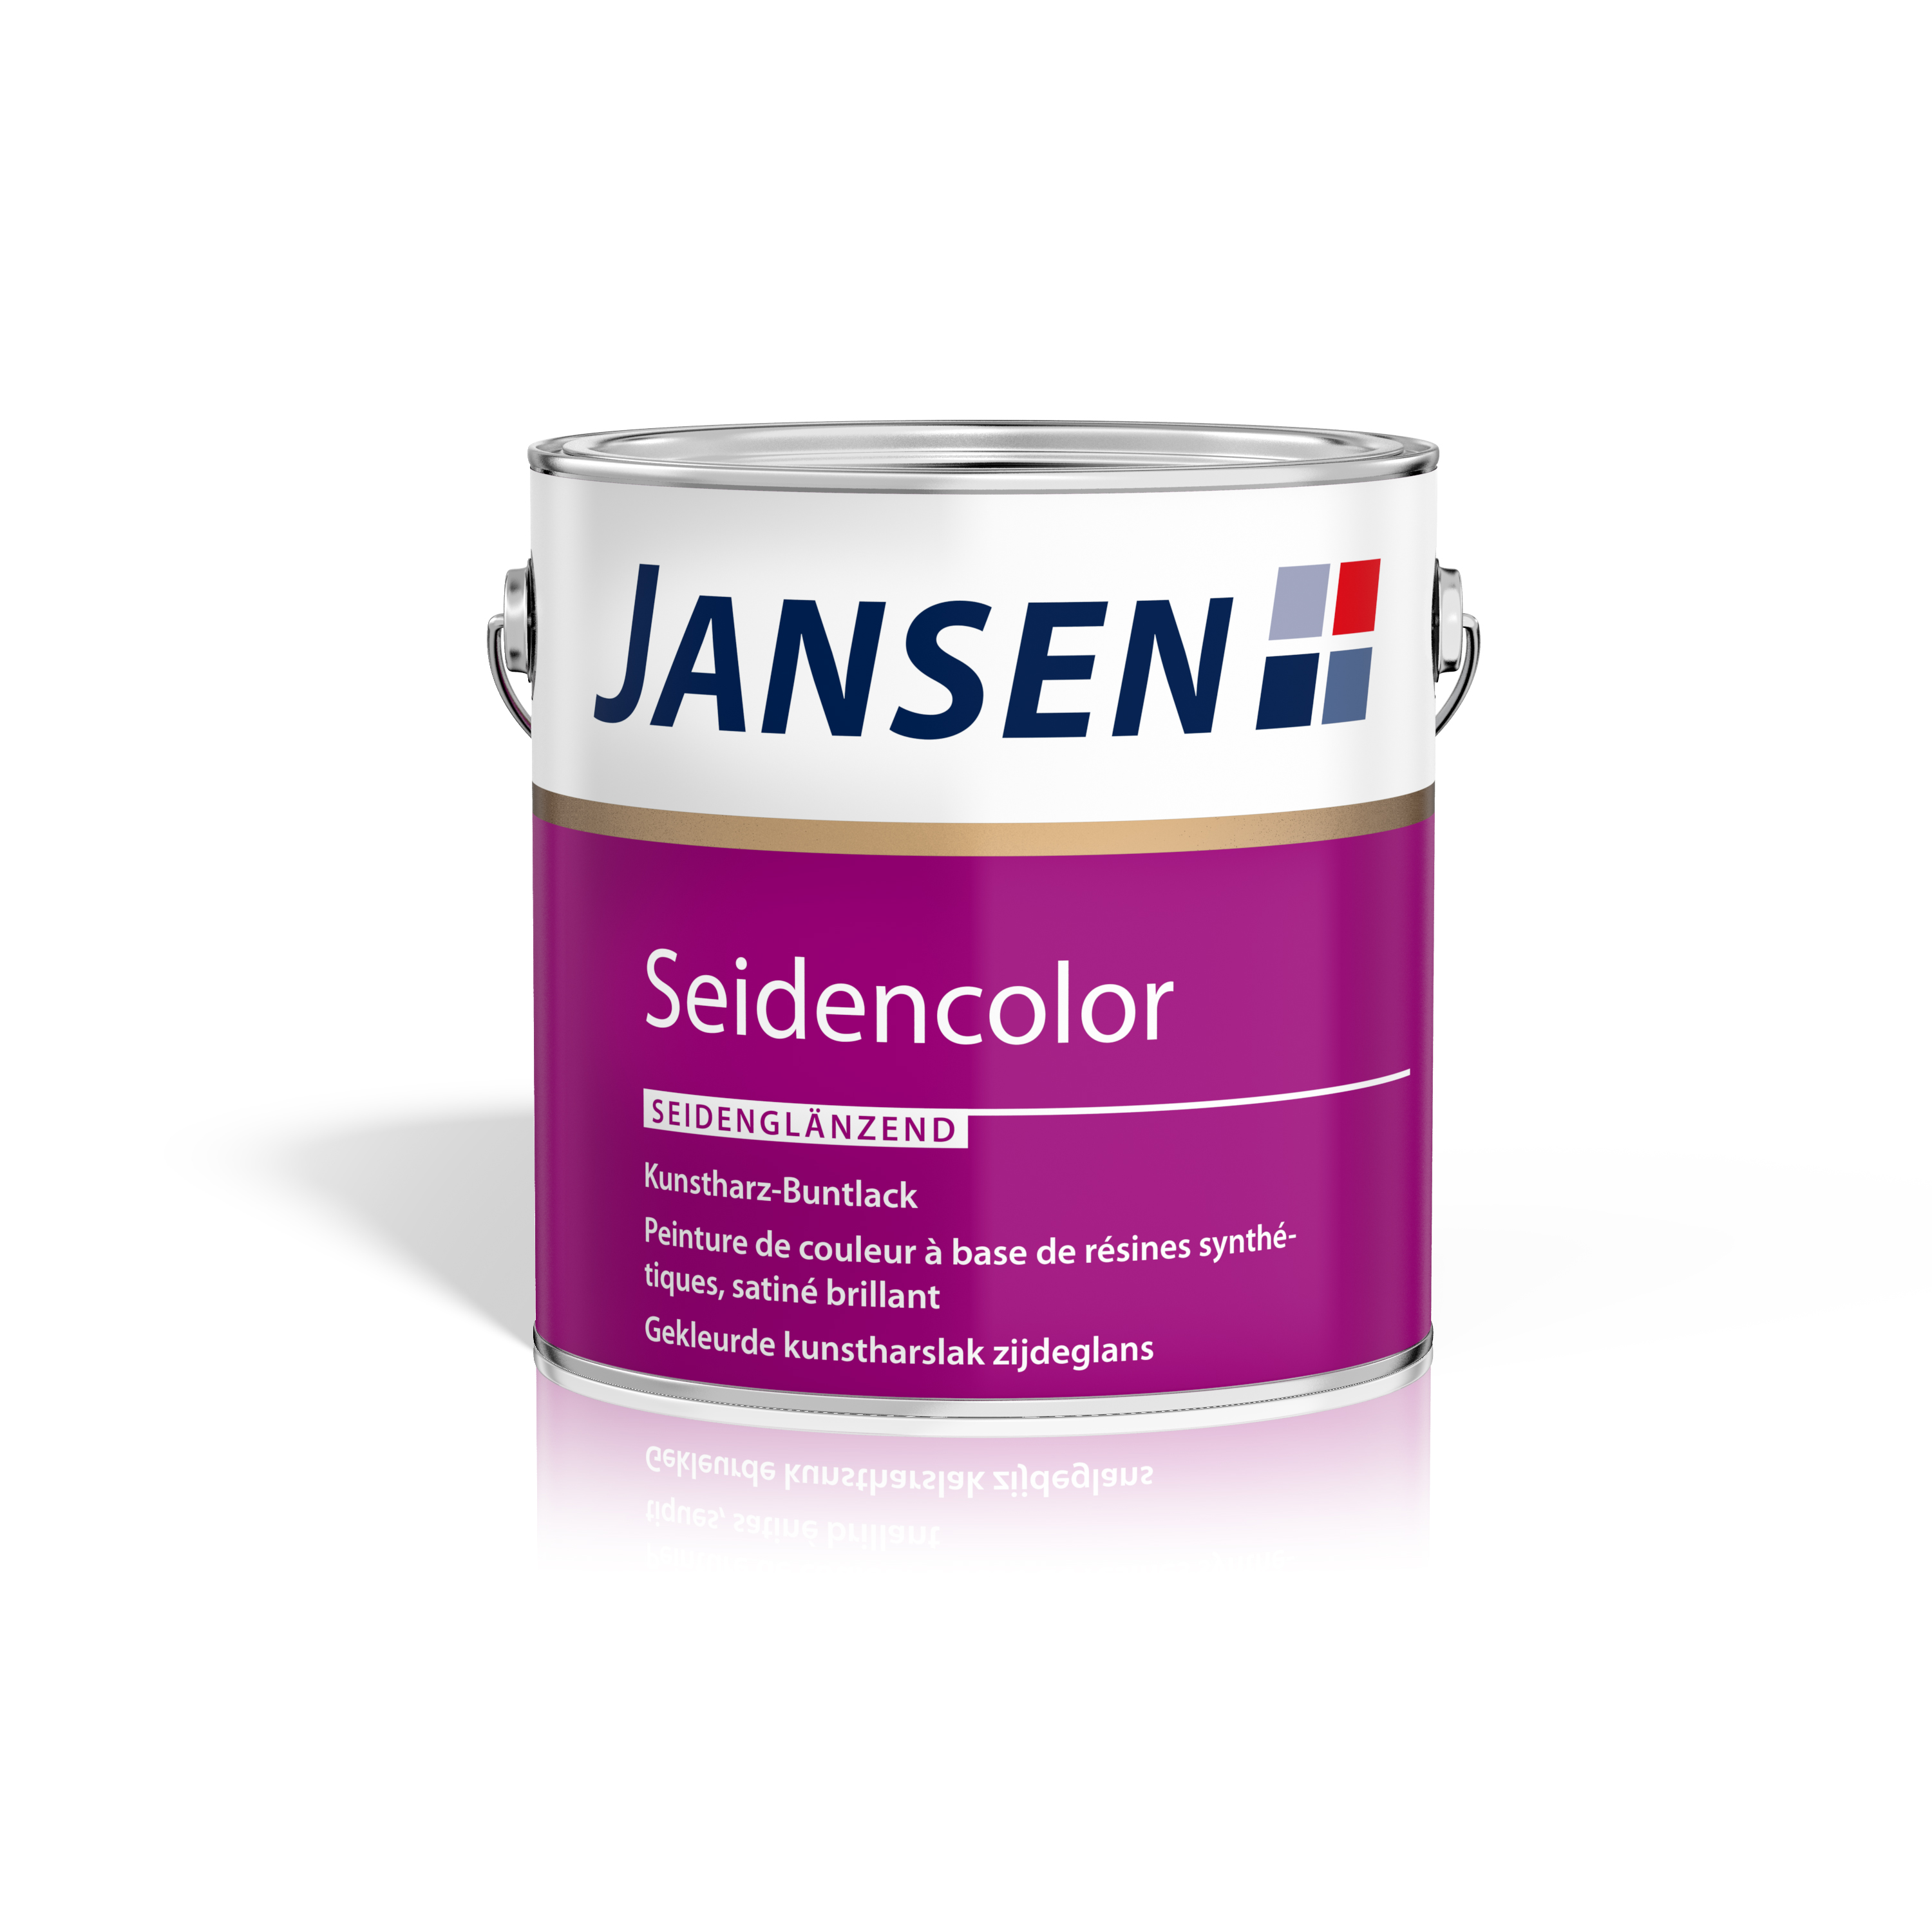 Jansen Seidencolor